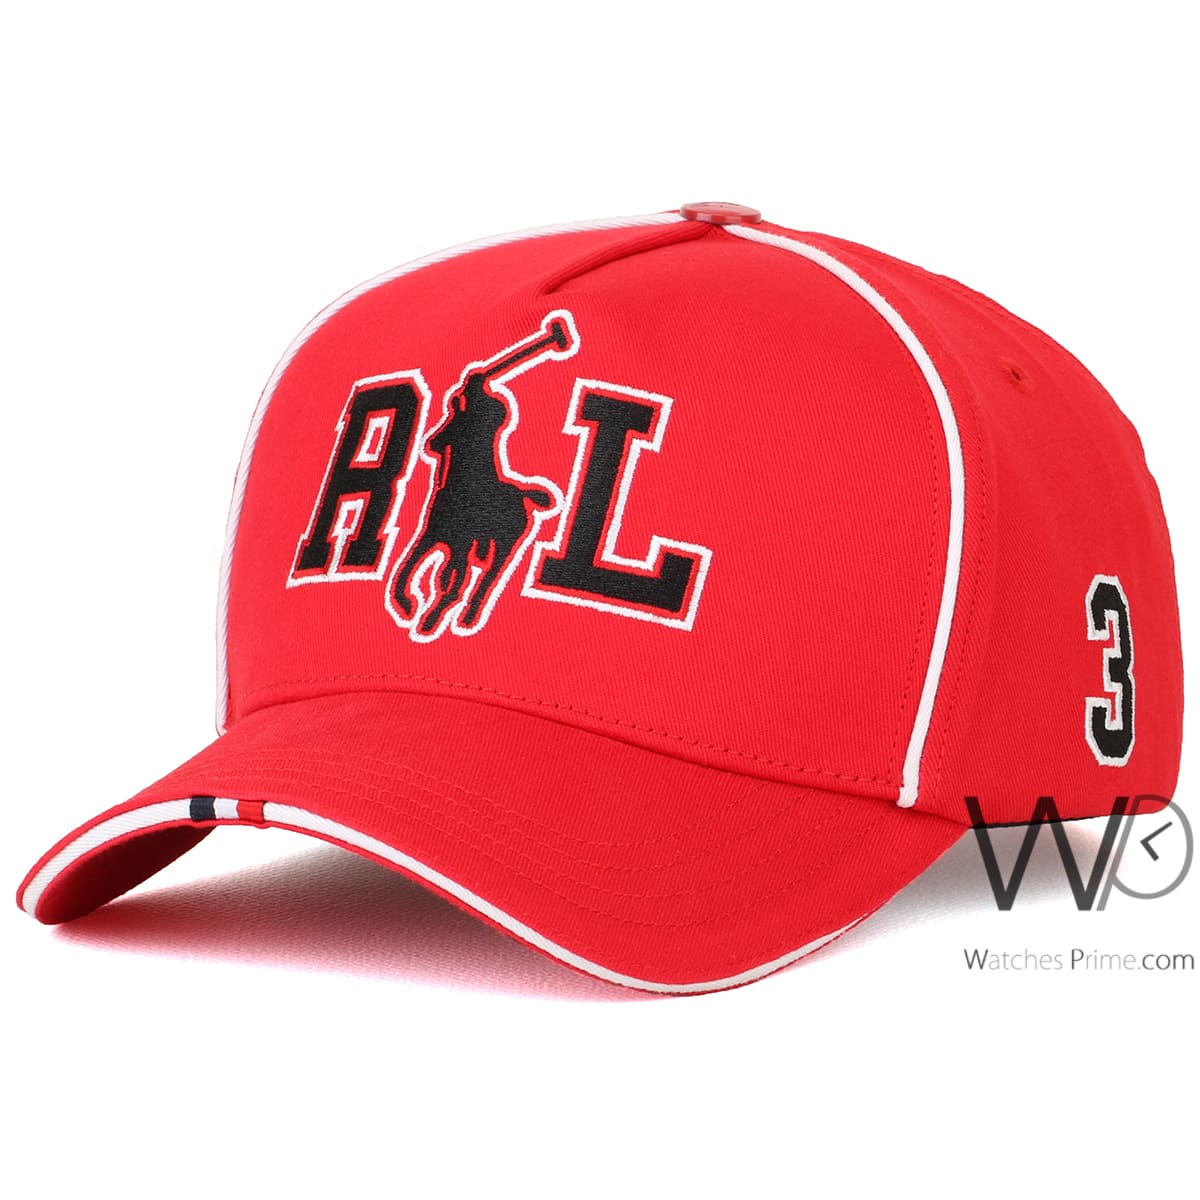 us-polo-ralph-lauren-baseball-red-cotton-cap-for-men